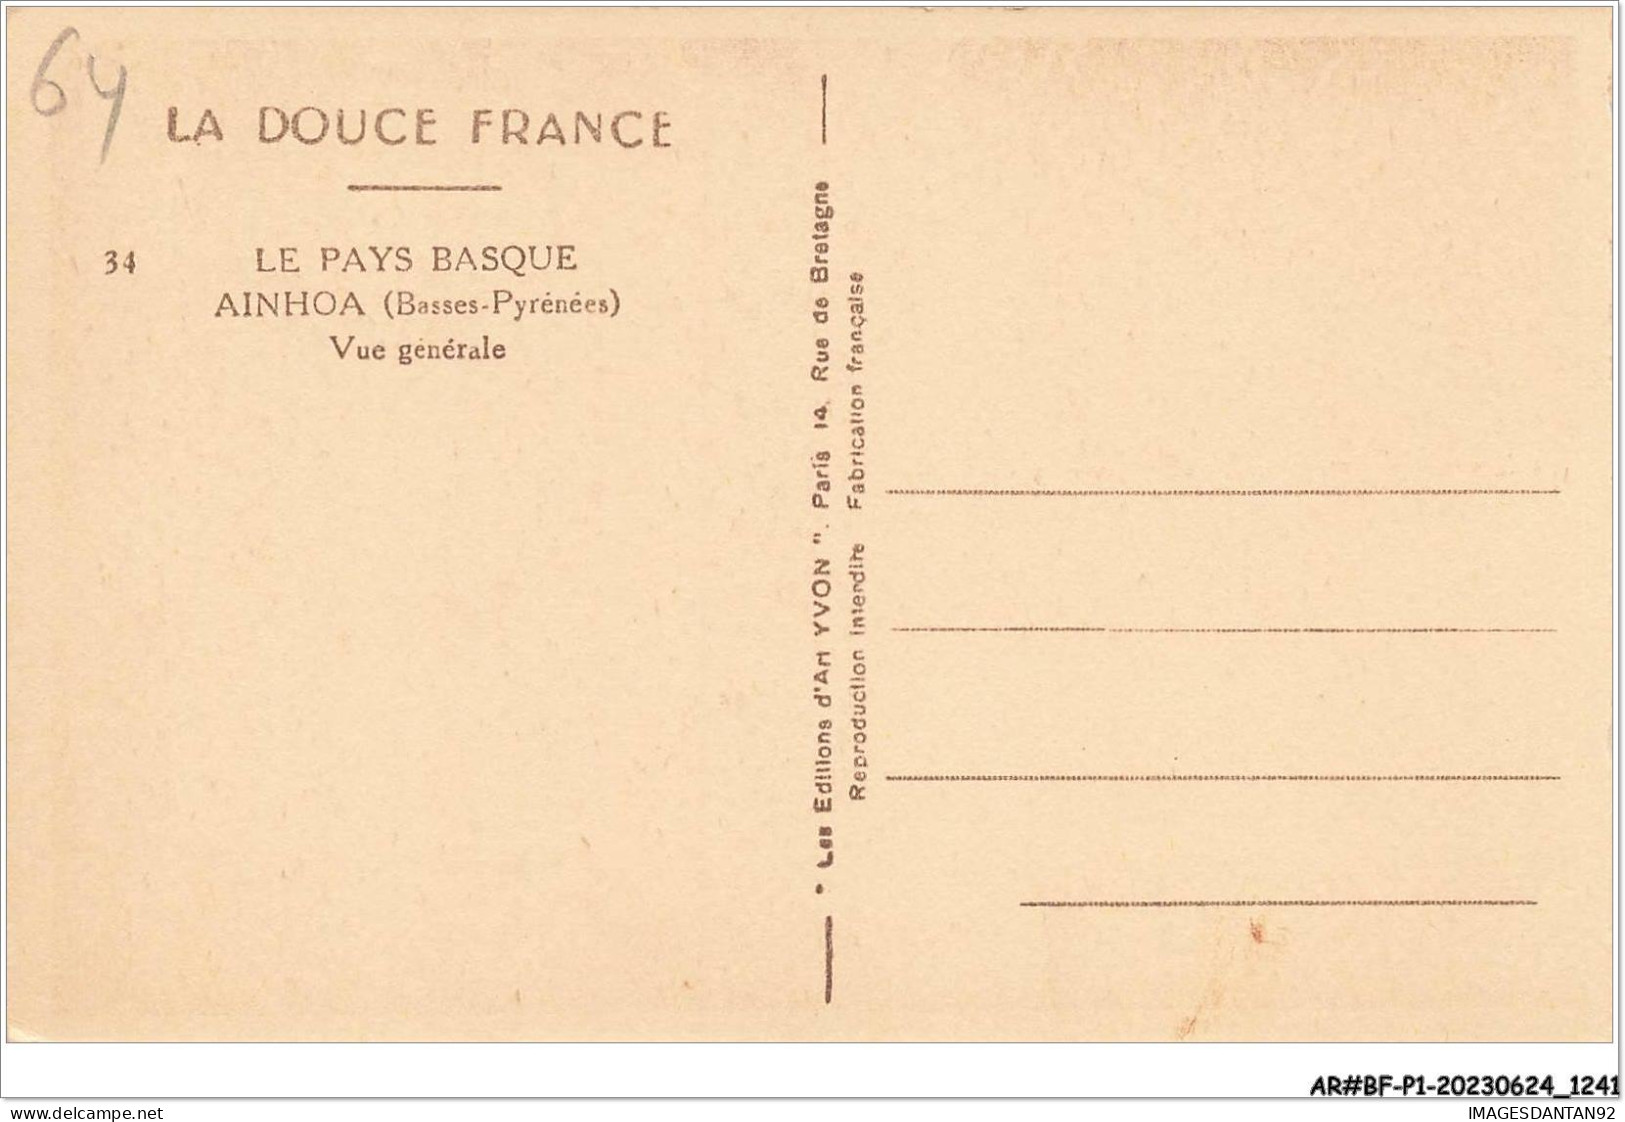 AR#BFP1-64-0621 - La Douce France - AINHOA - Vue Générale - Ainhoa